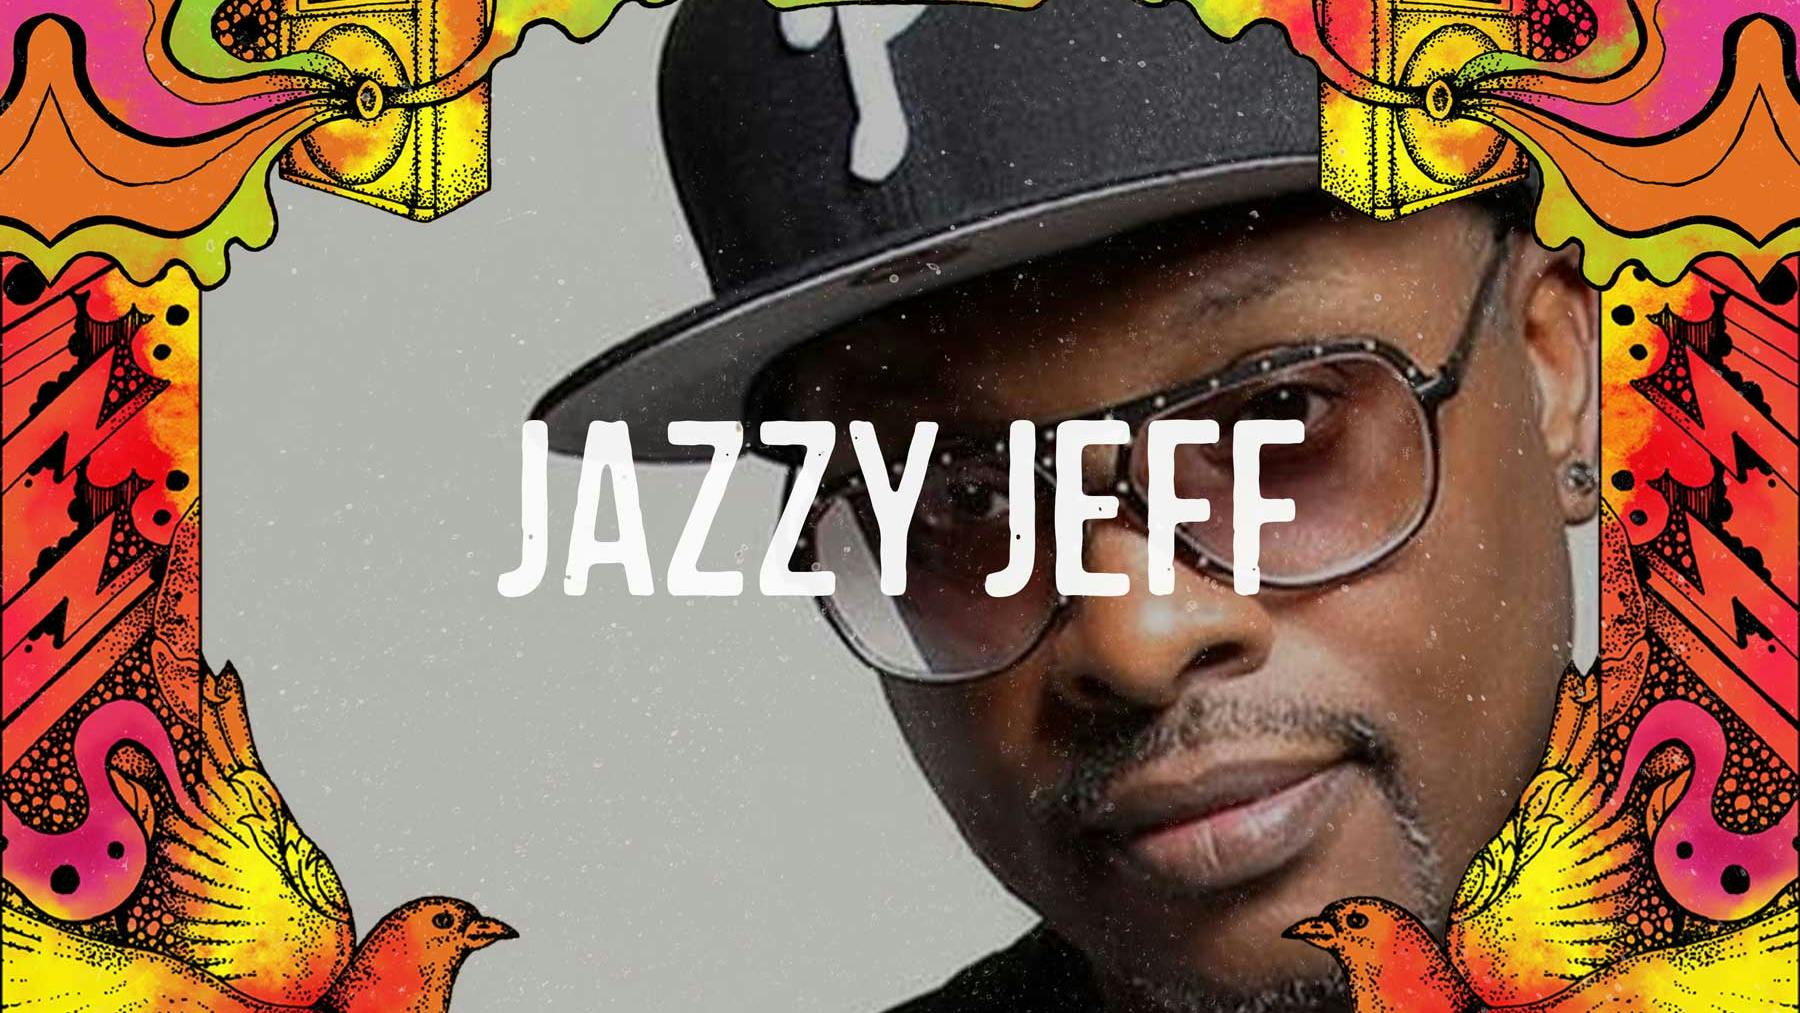 Introducing: Jazzy Jeff